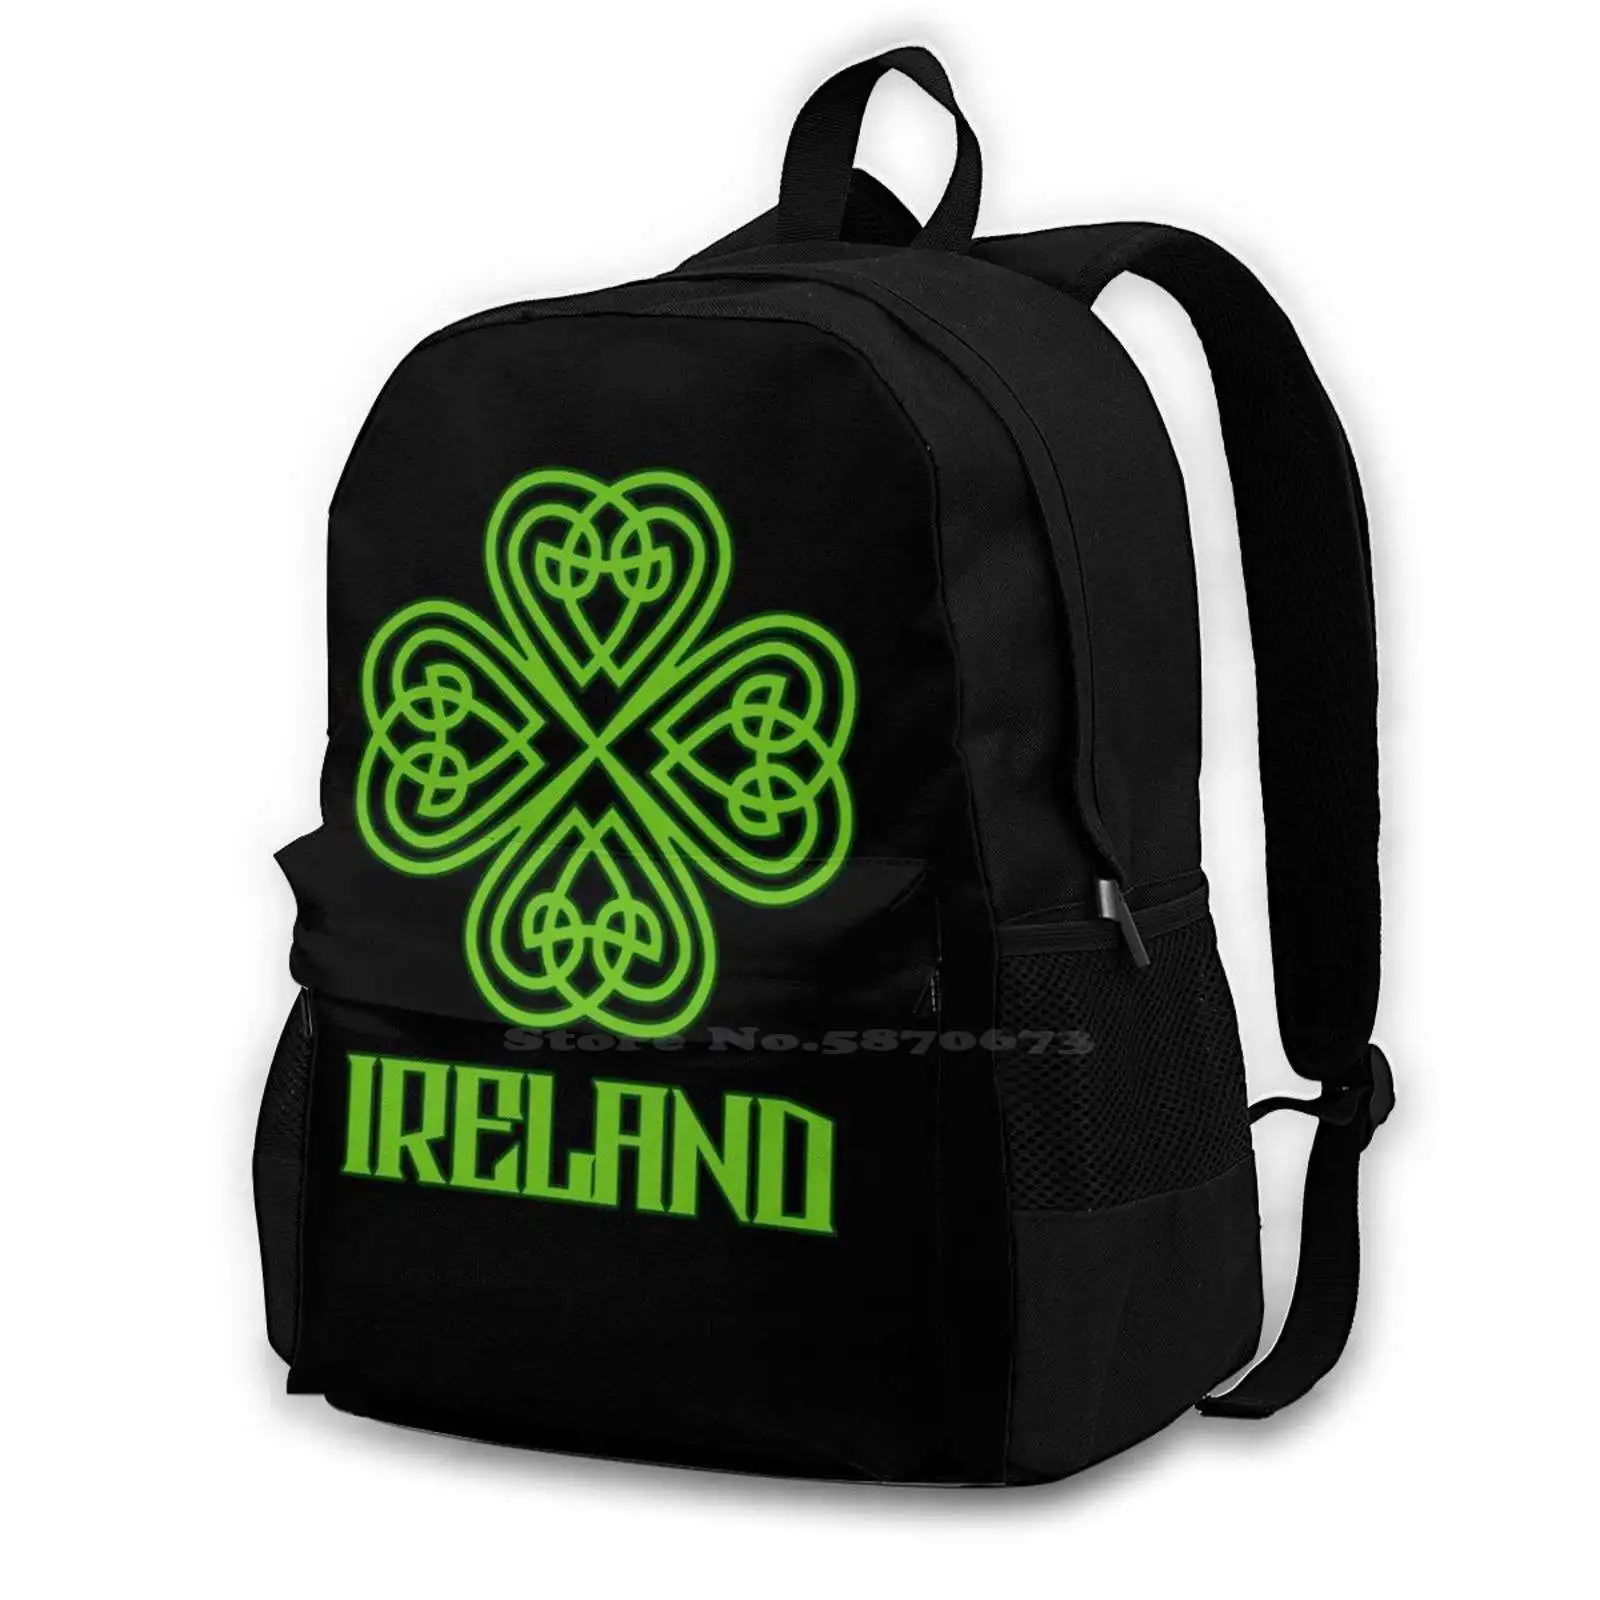 Ирландия Ирландска детелина Модни чанти Раници Ирландия Ирландска детелина Великобритания Конър Макгрегър Green S Day Бостън Масачузетс Flogging . ' - ' . 0